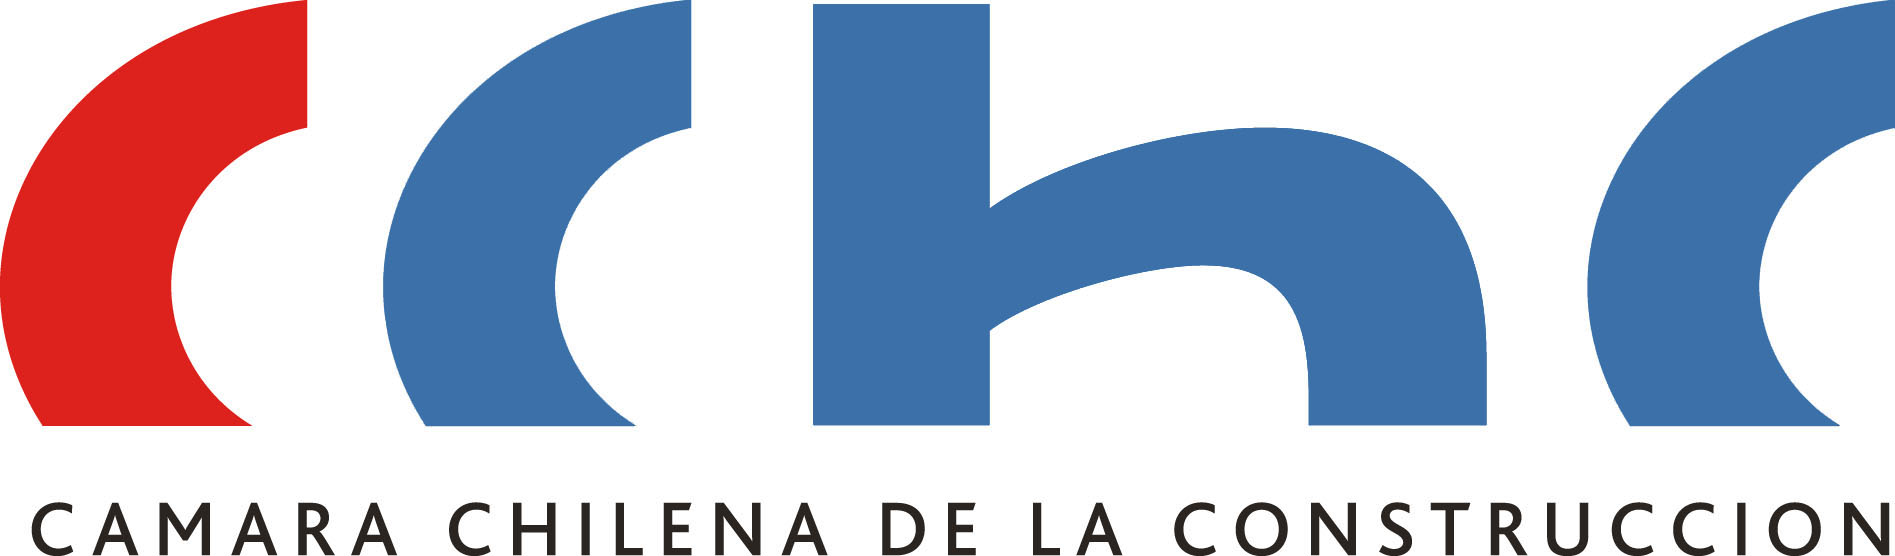 Logo_CChC_fondo_blancoCD.jpg